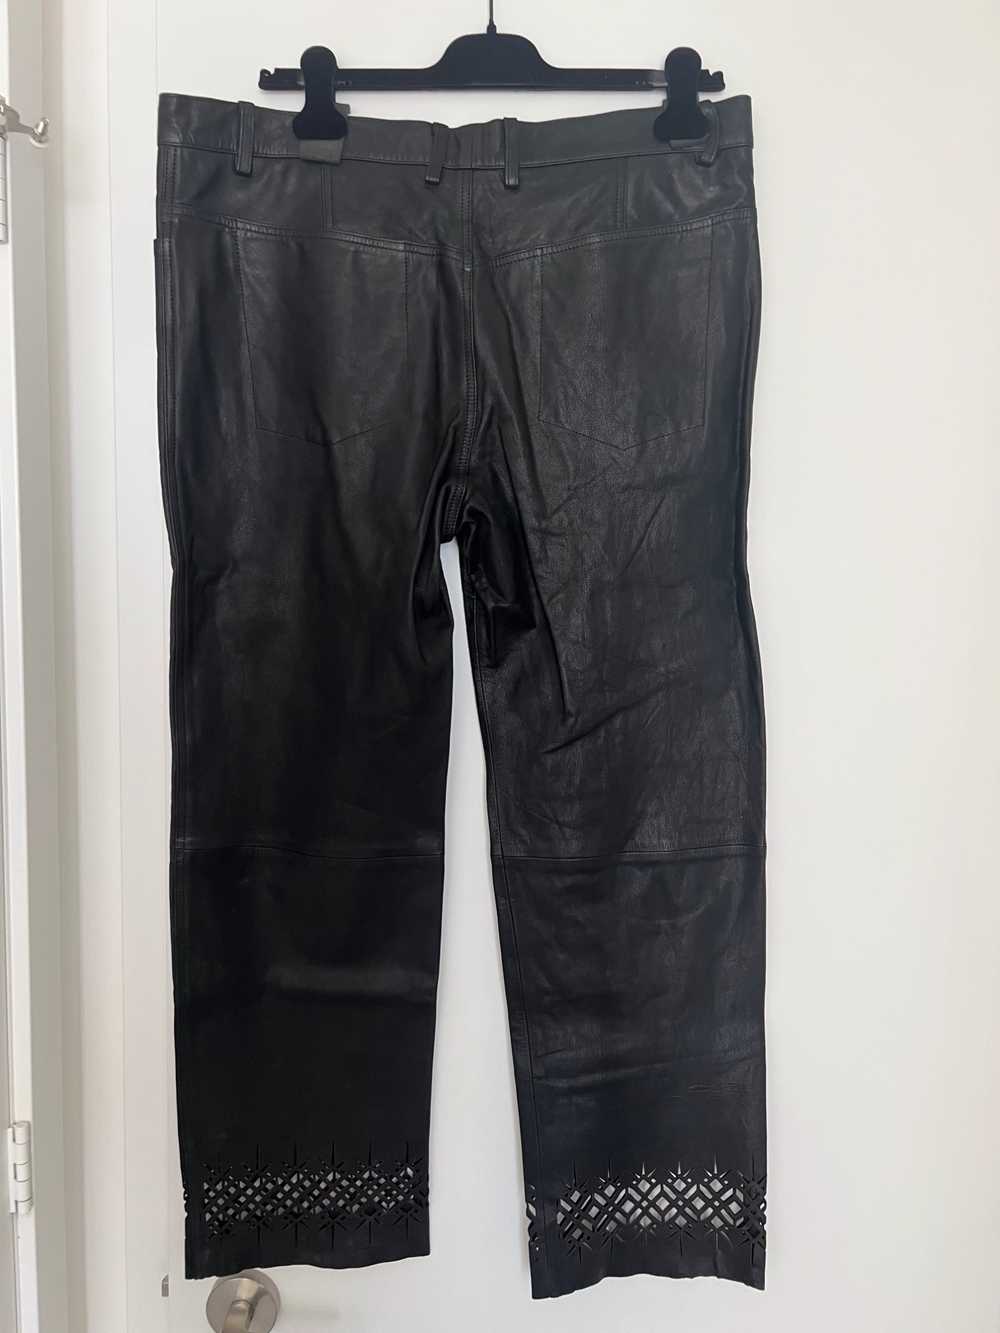 Haider Ackermann SS19 Lasercut Leather Trousers - image 2